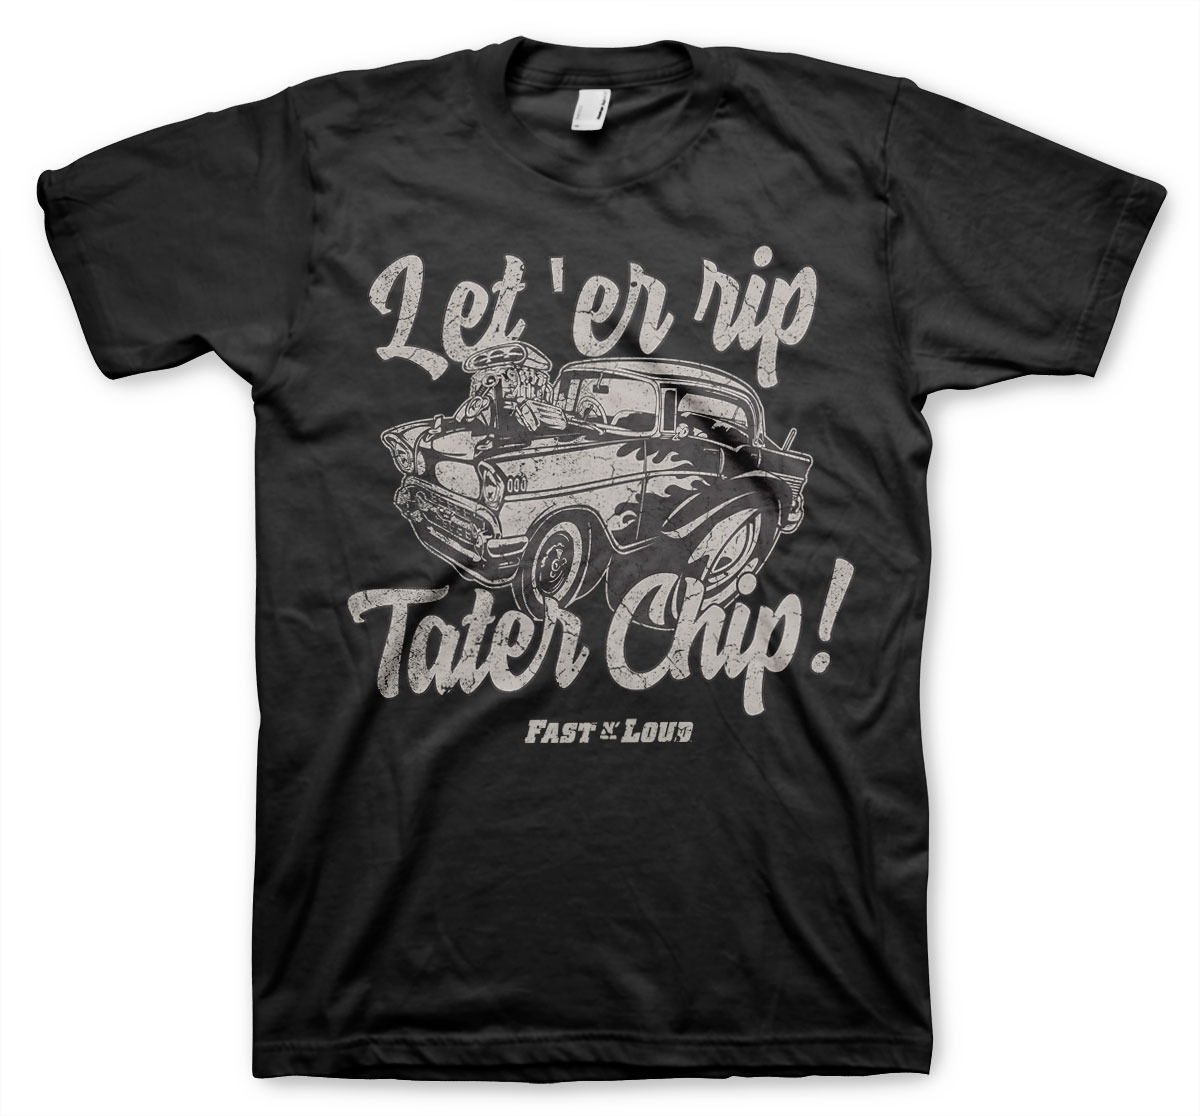 Let 'Er Rip Tater Chip T-Shirt